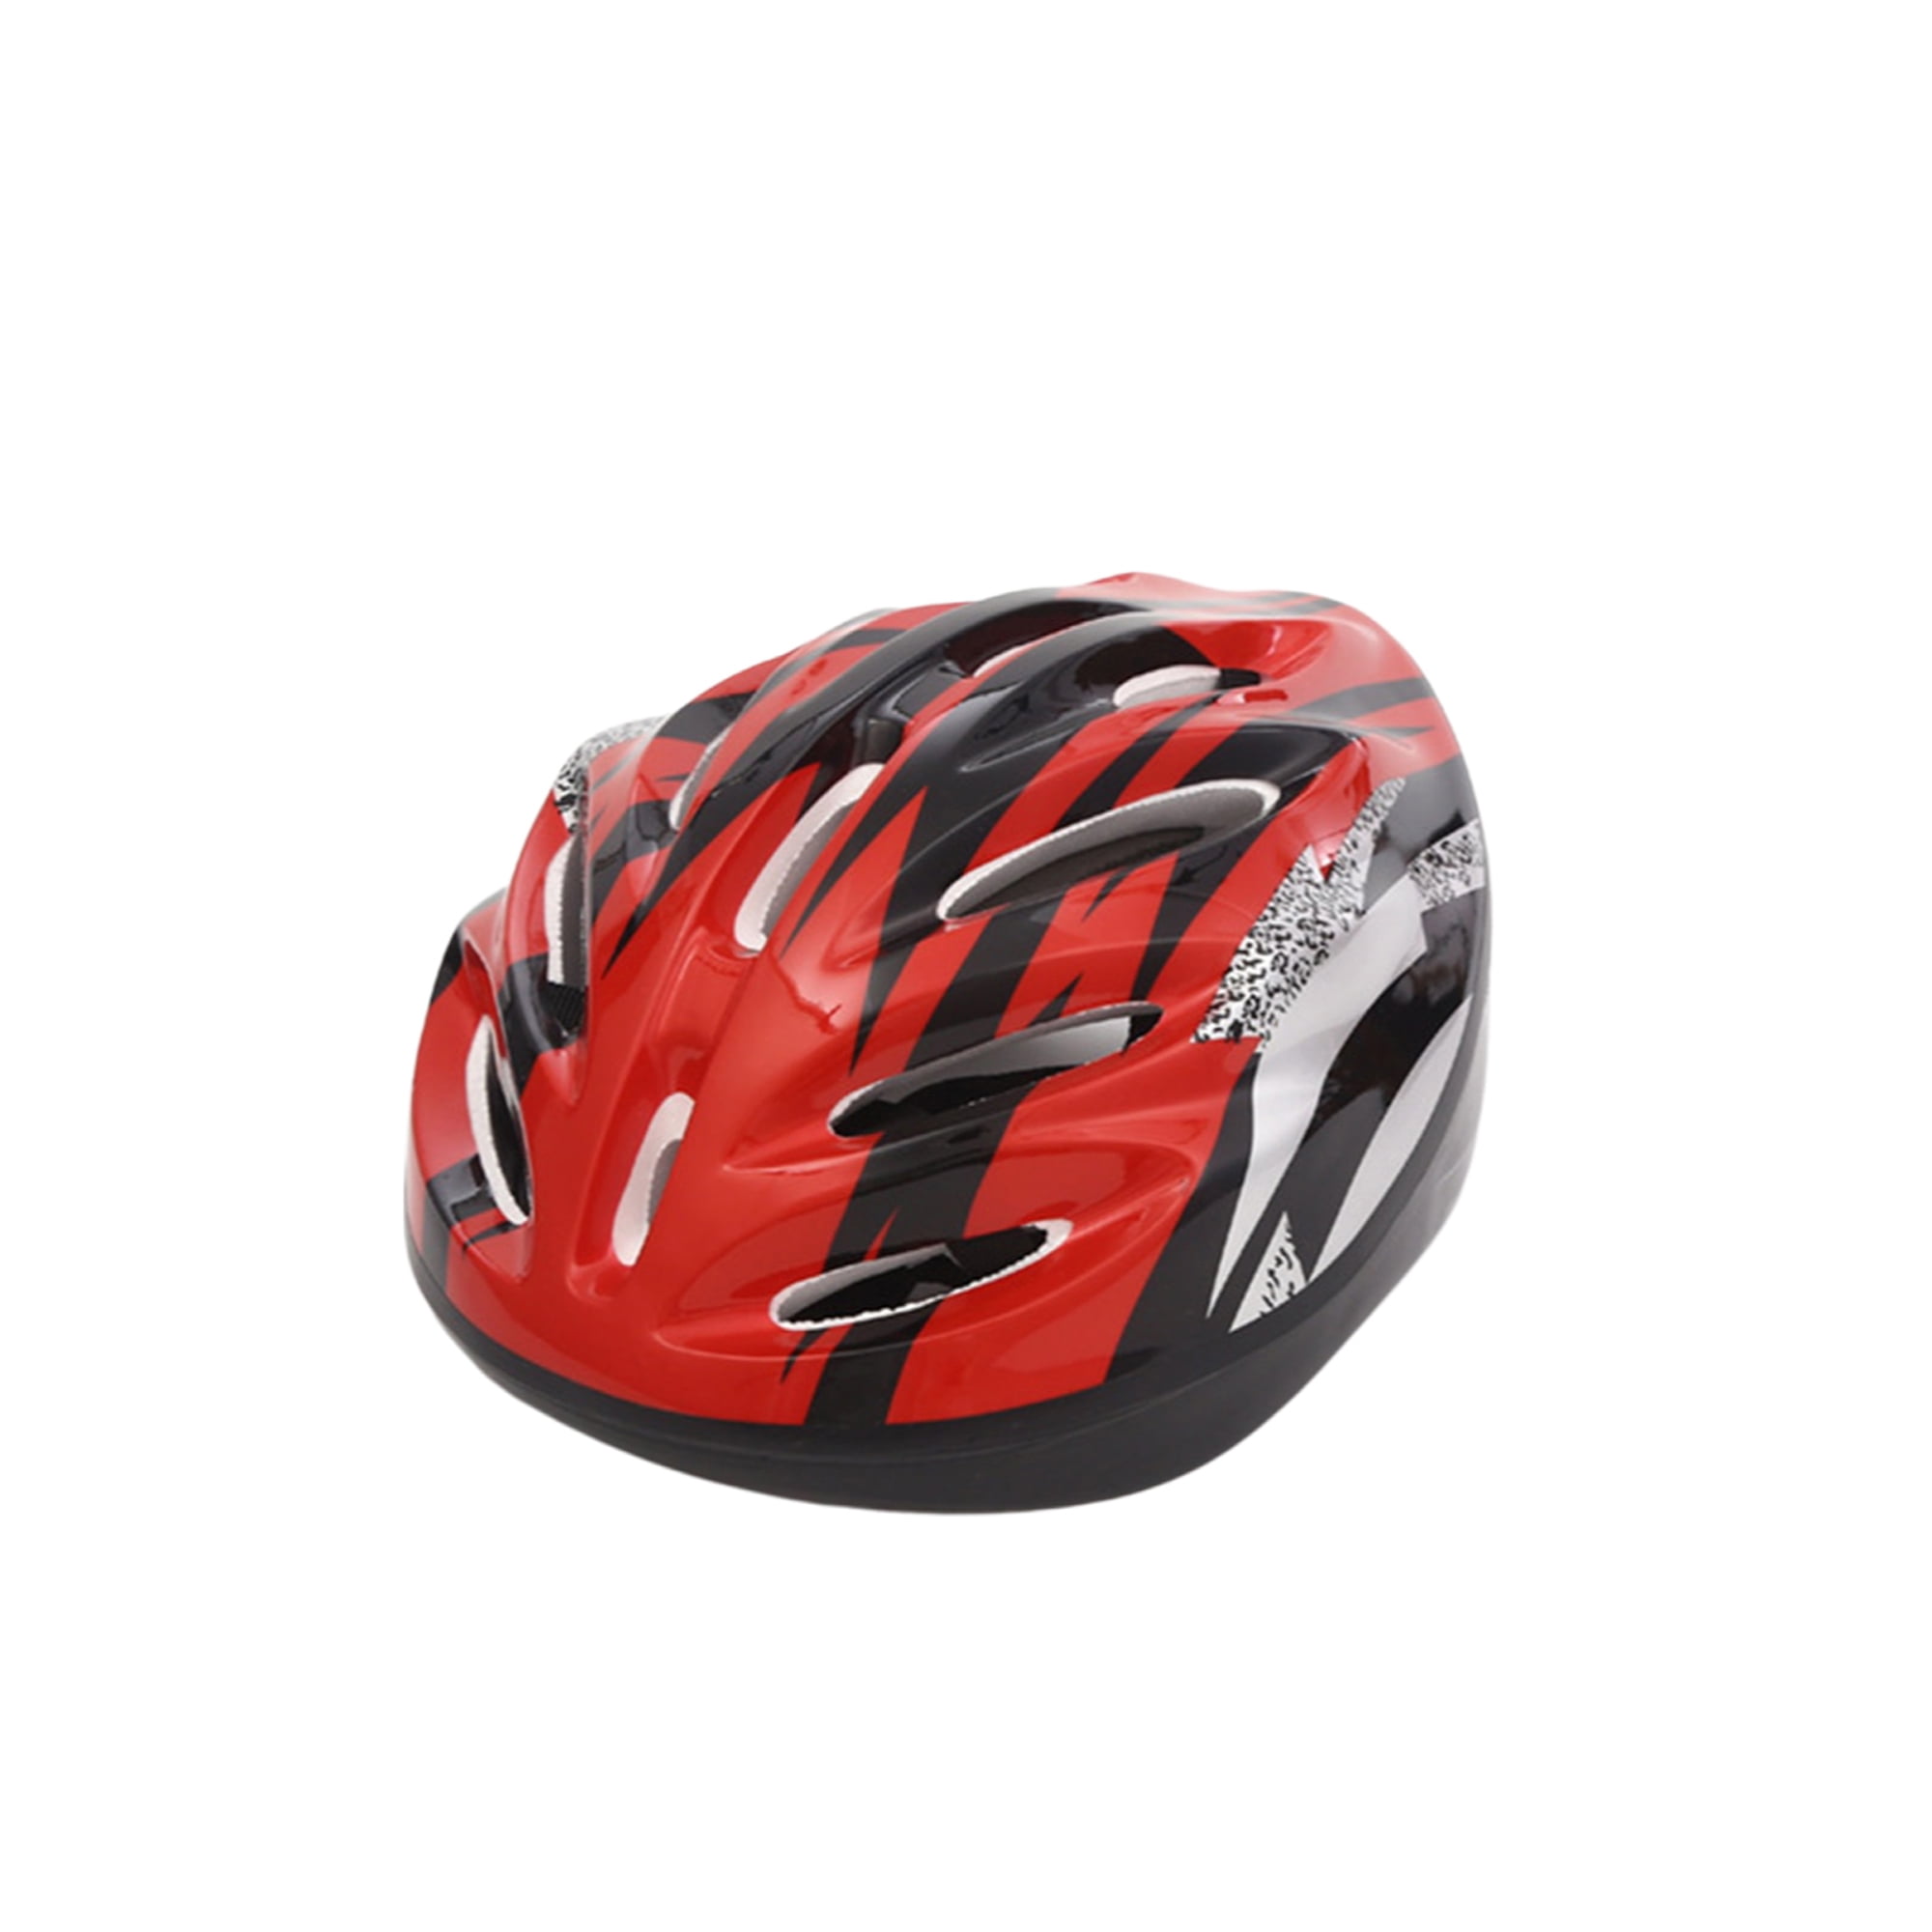 Bicycle Helmet Bike Cycling Adult Adjustable Unisex Safety Helmet Outdoor Sports 